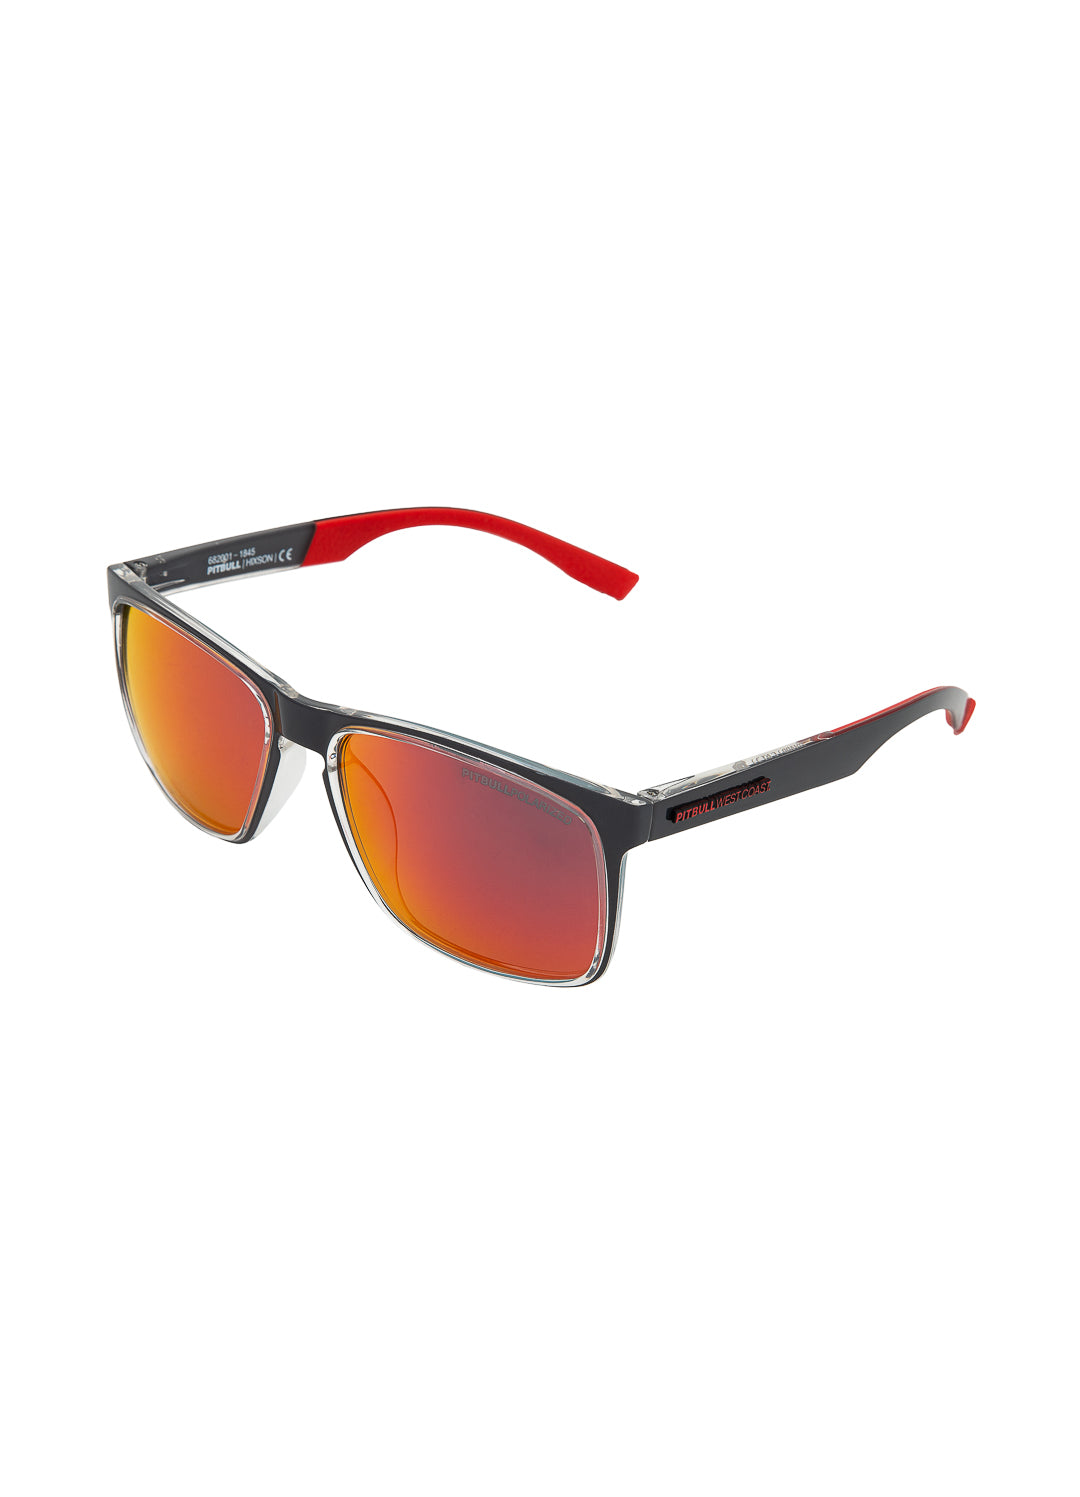 Sunglasses HIXSON Grey/Red